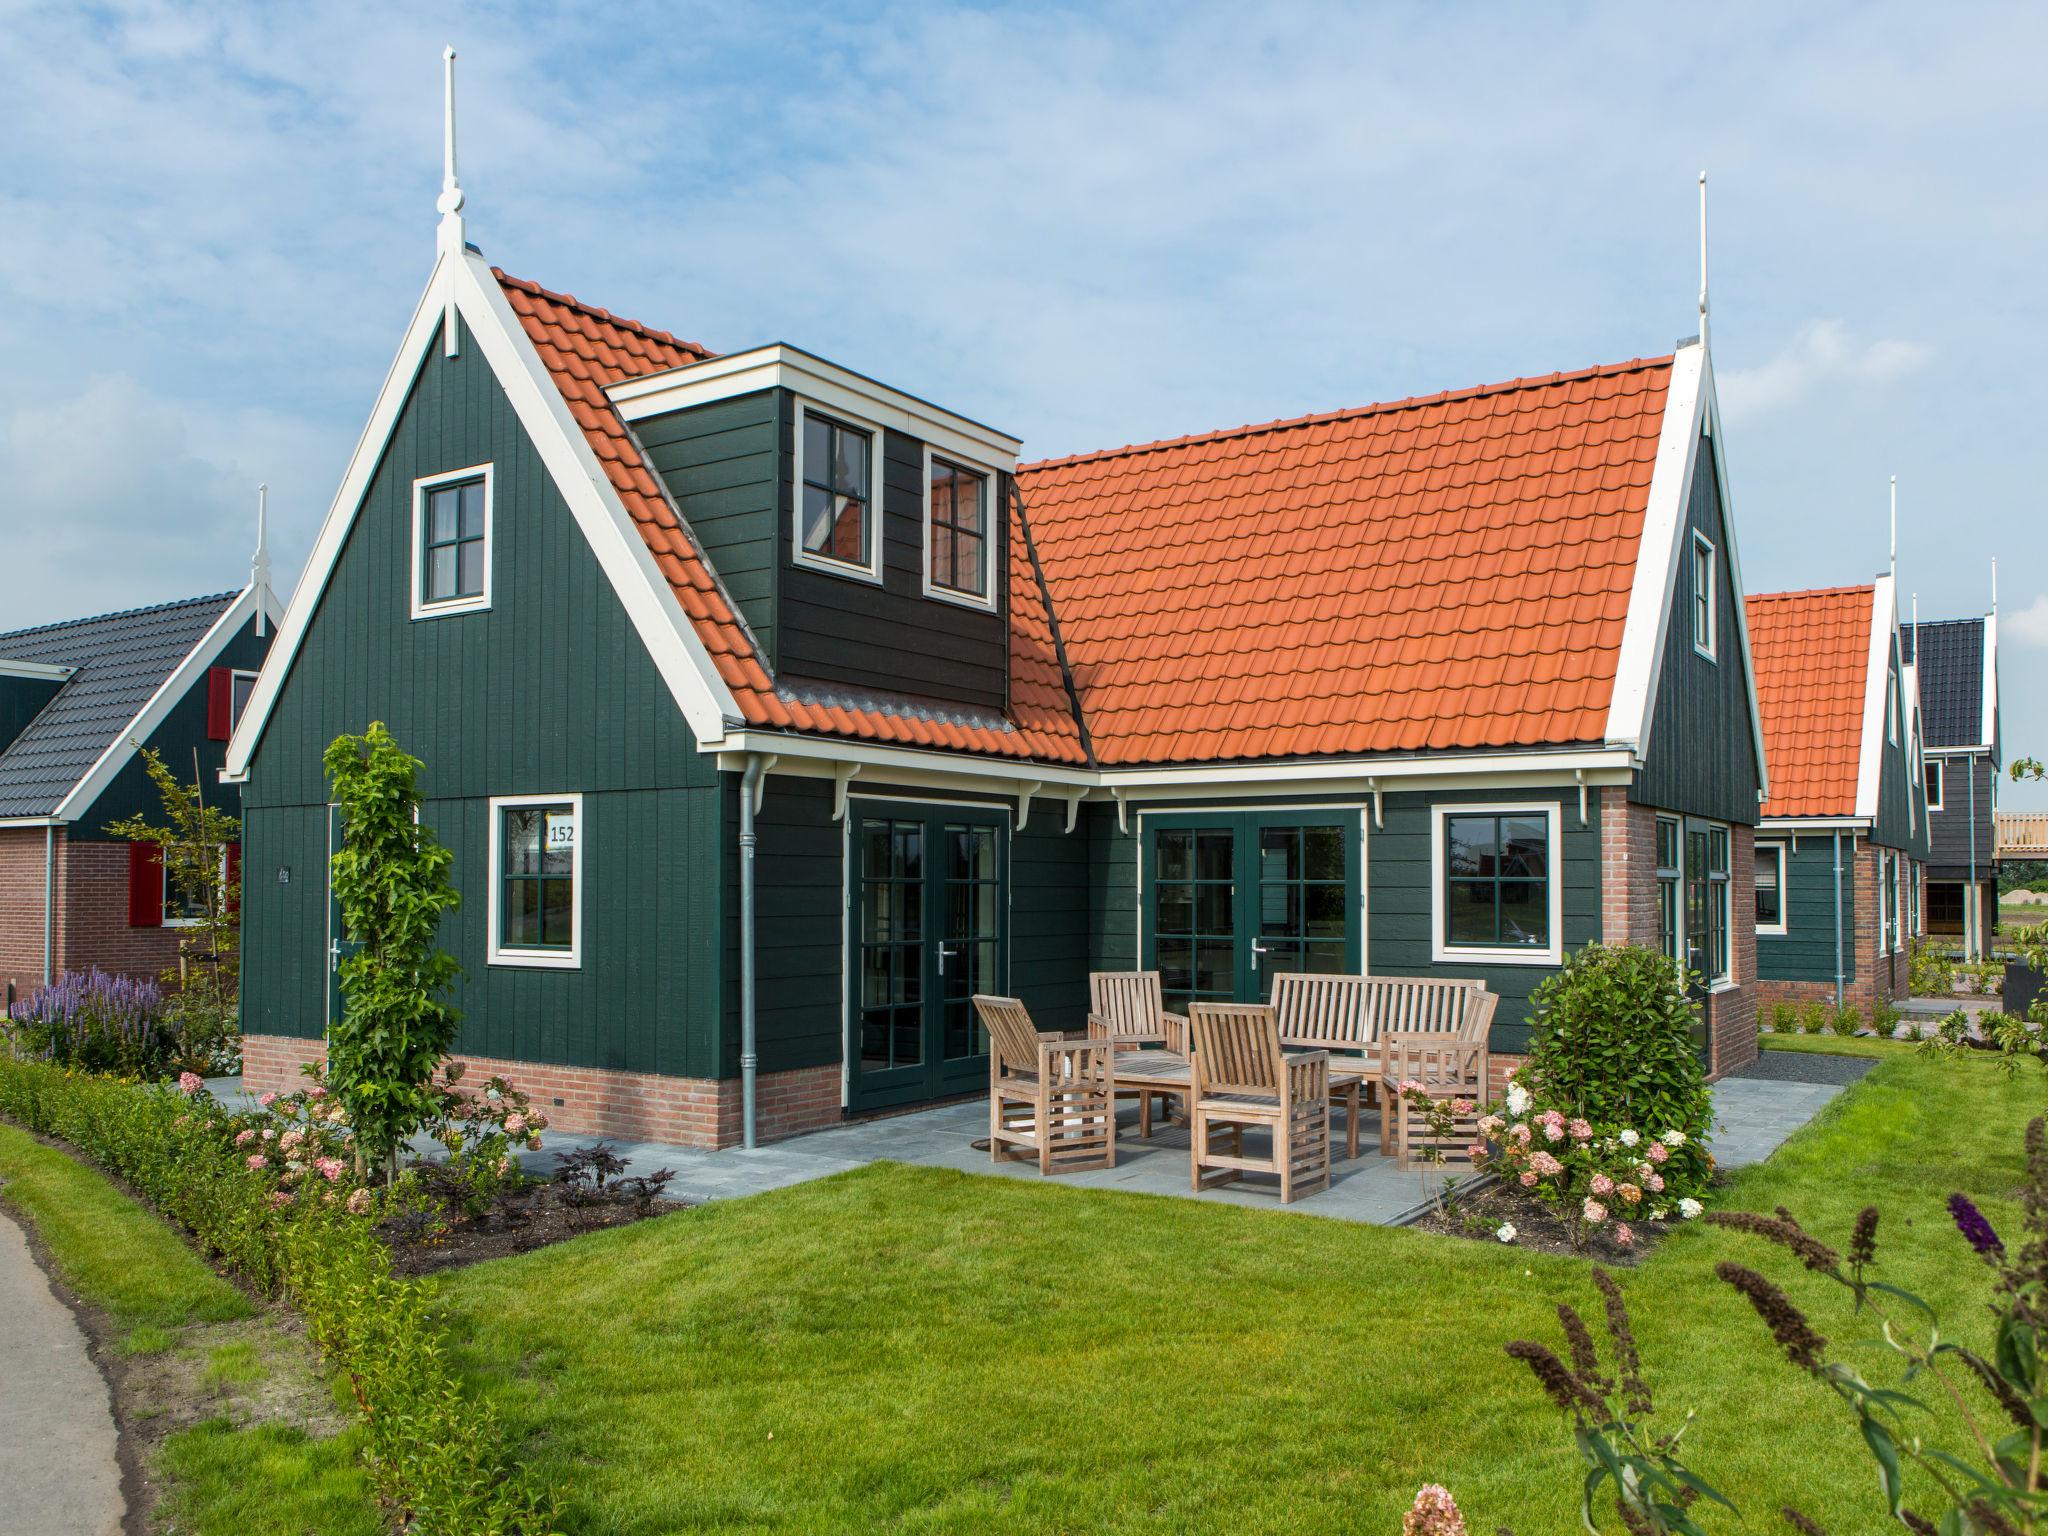 Photo 1 - 3 bedroom House in West-Graftdijk with terrace